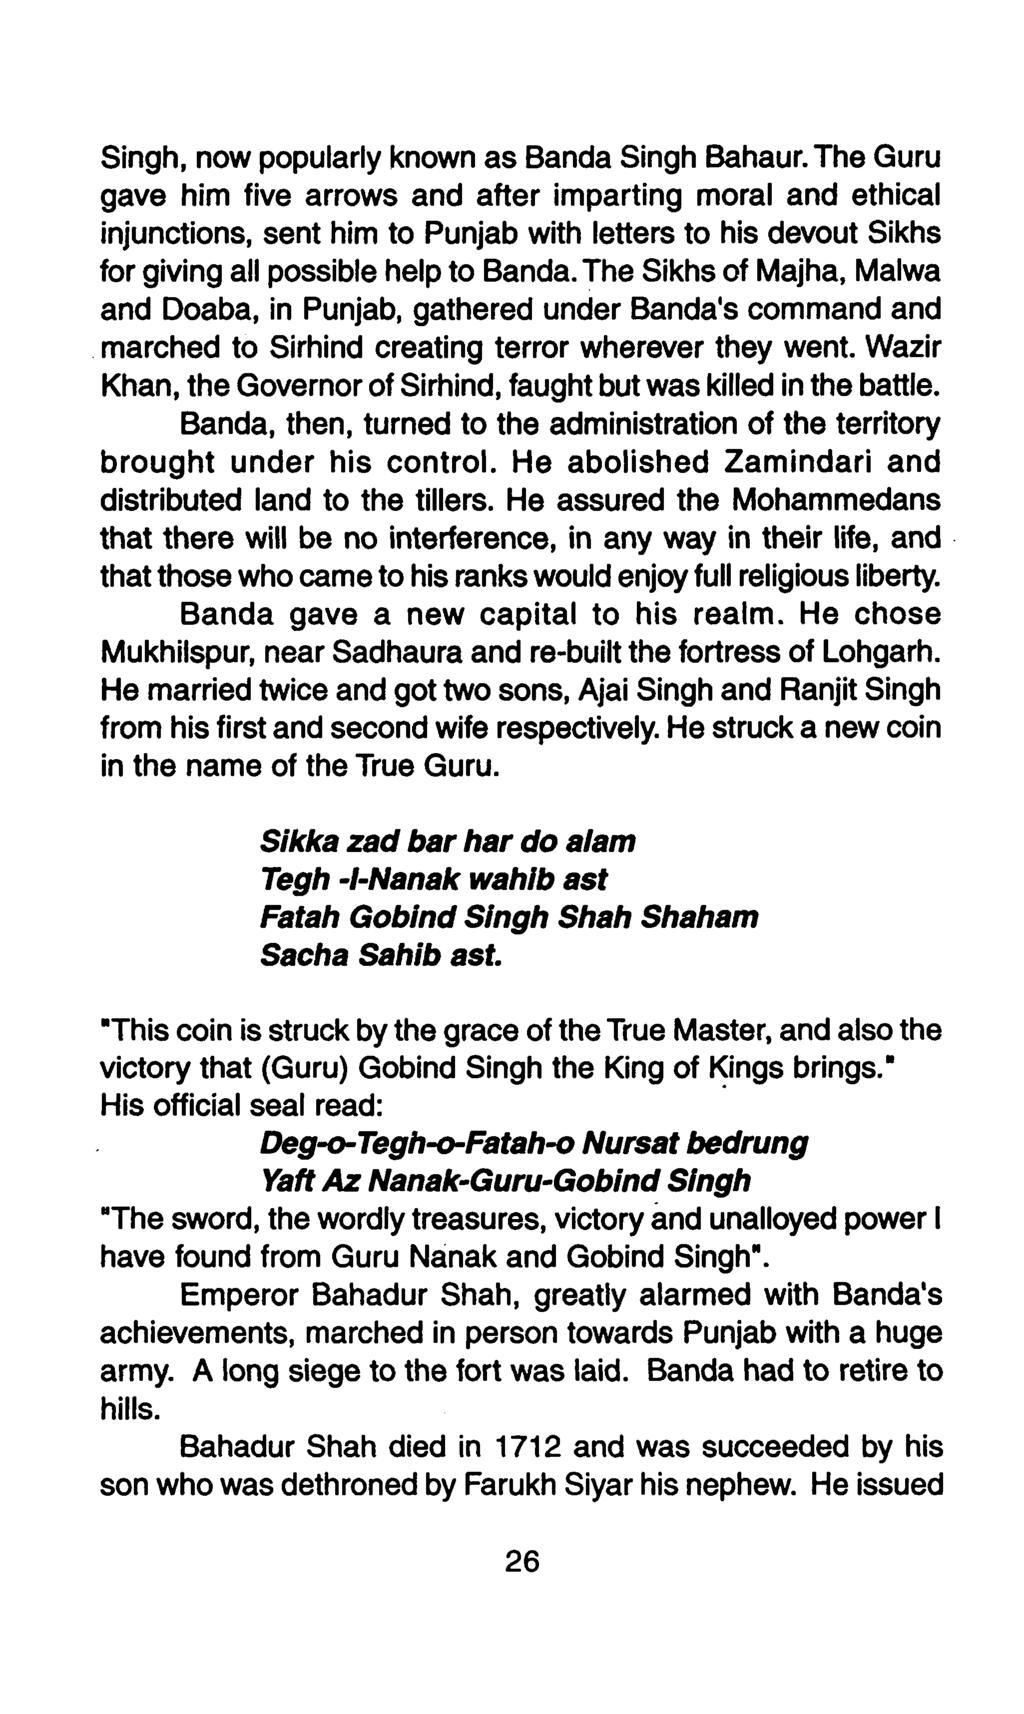 Singh, now popularly known as Banda Singh Bahaur.